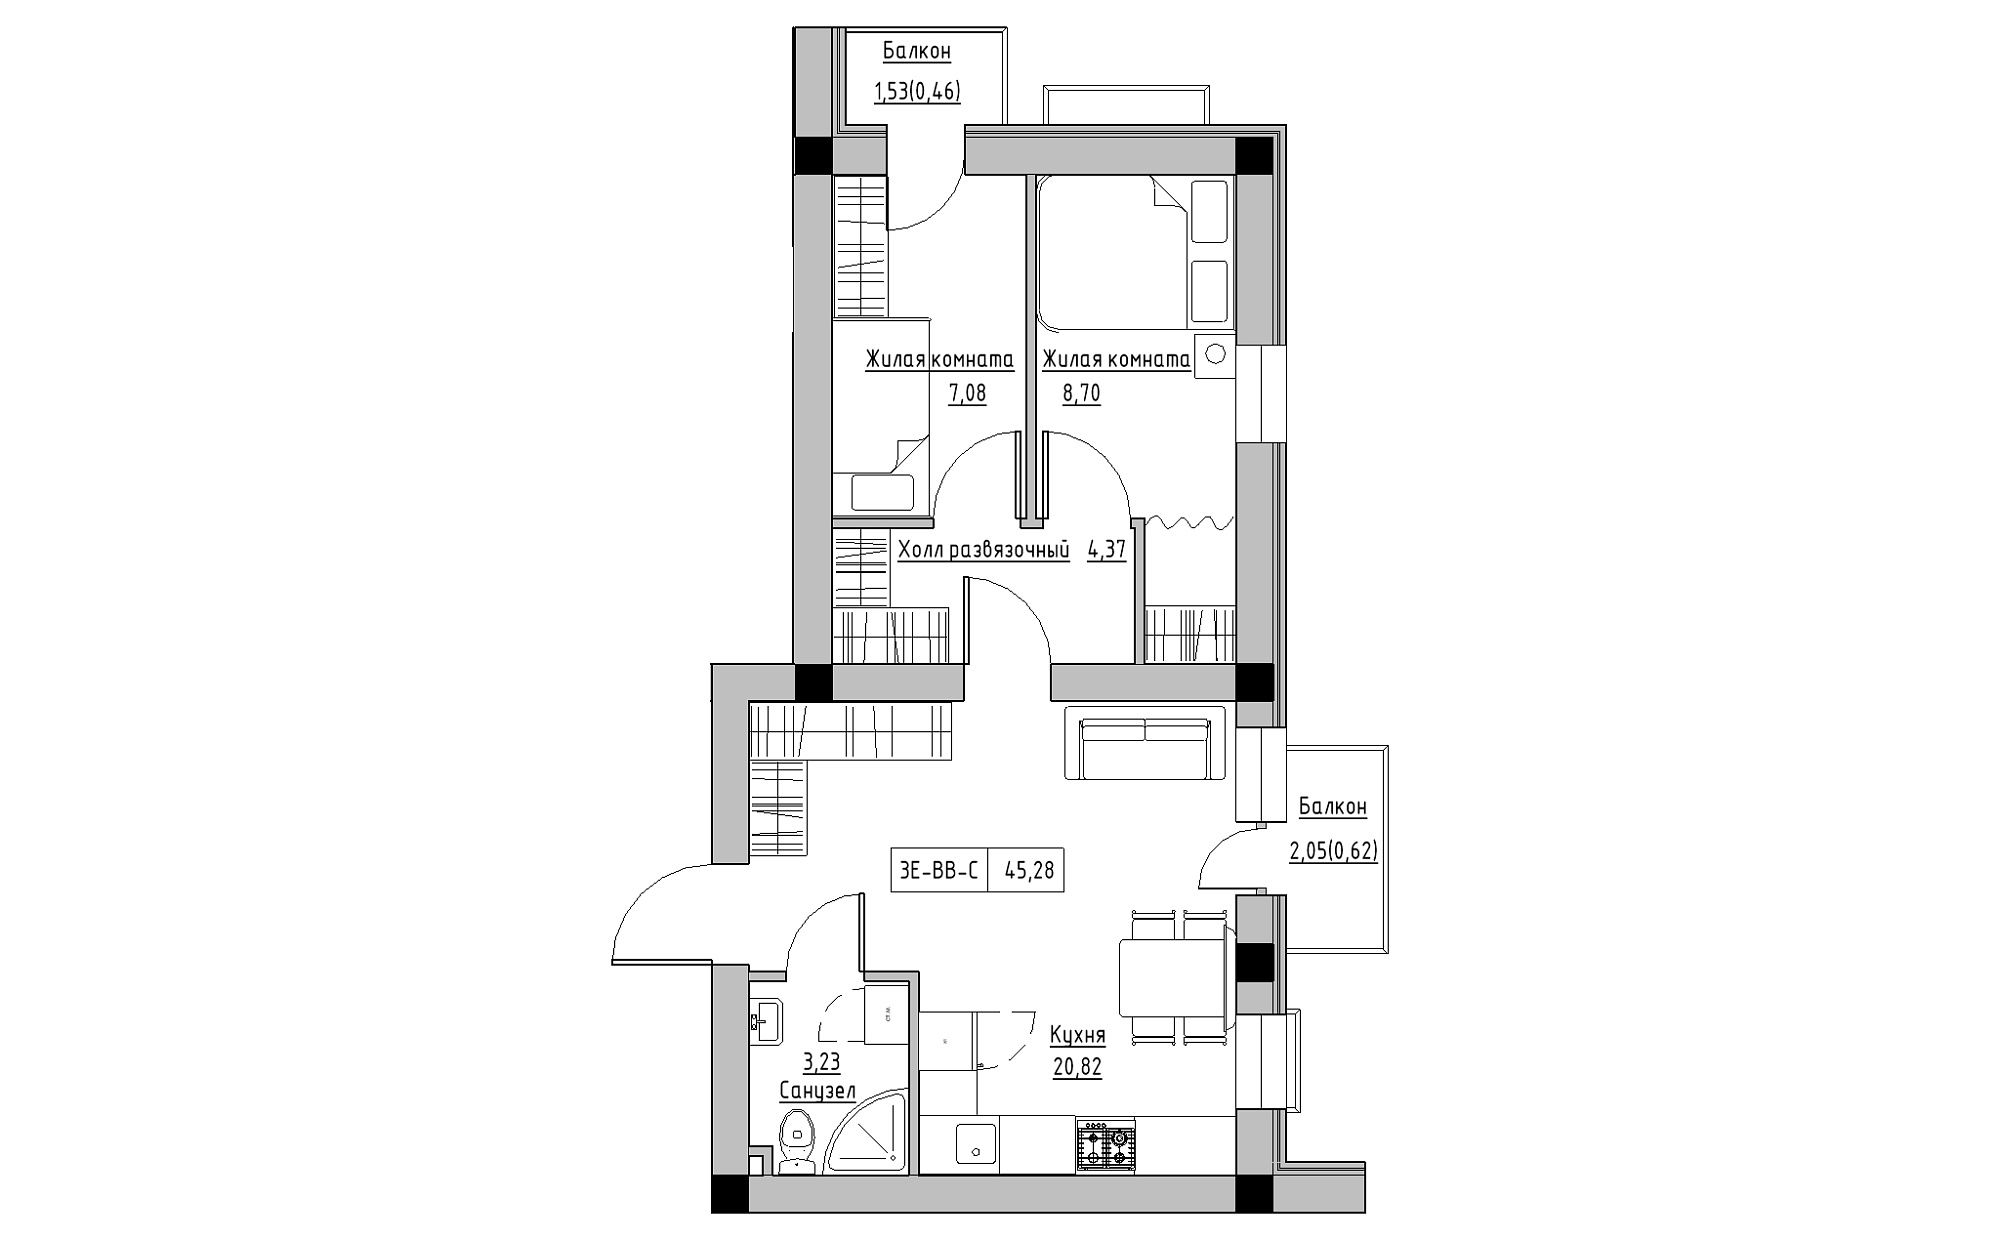 Planning 3-rm flats area 45.28m2, KS-022-05/0011.